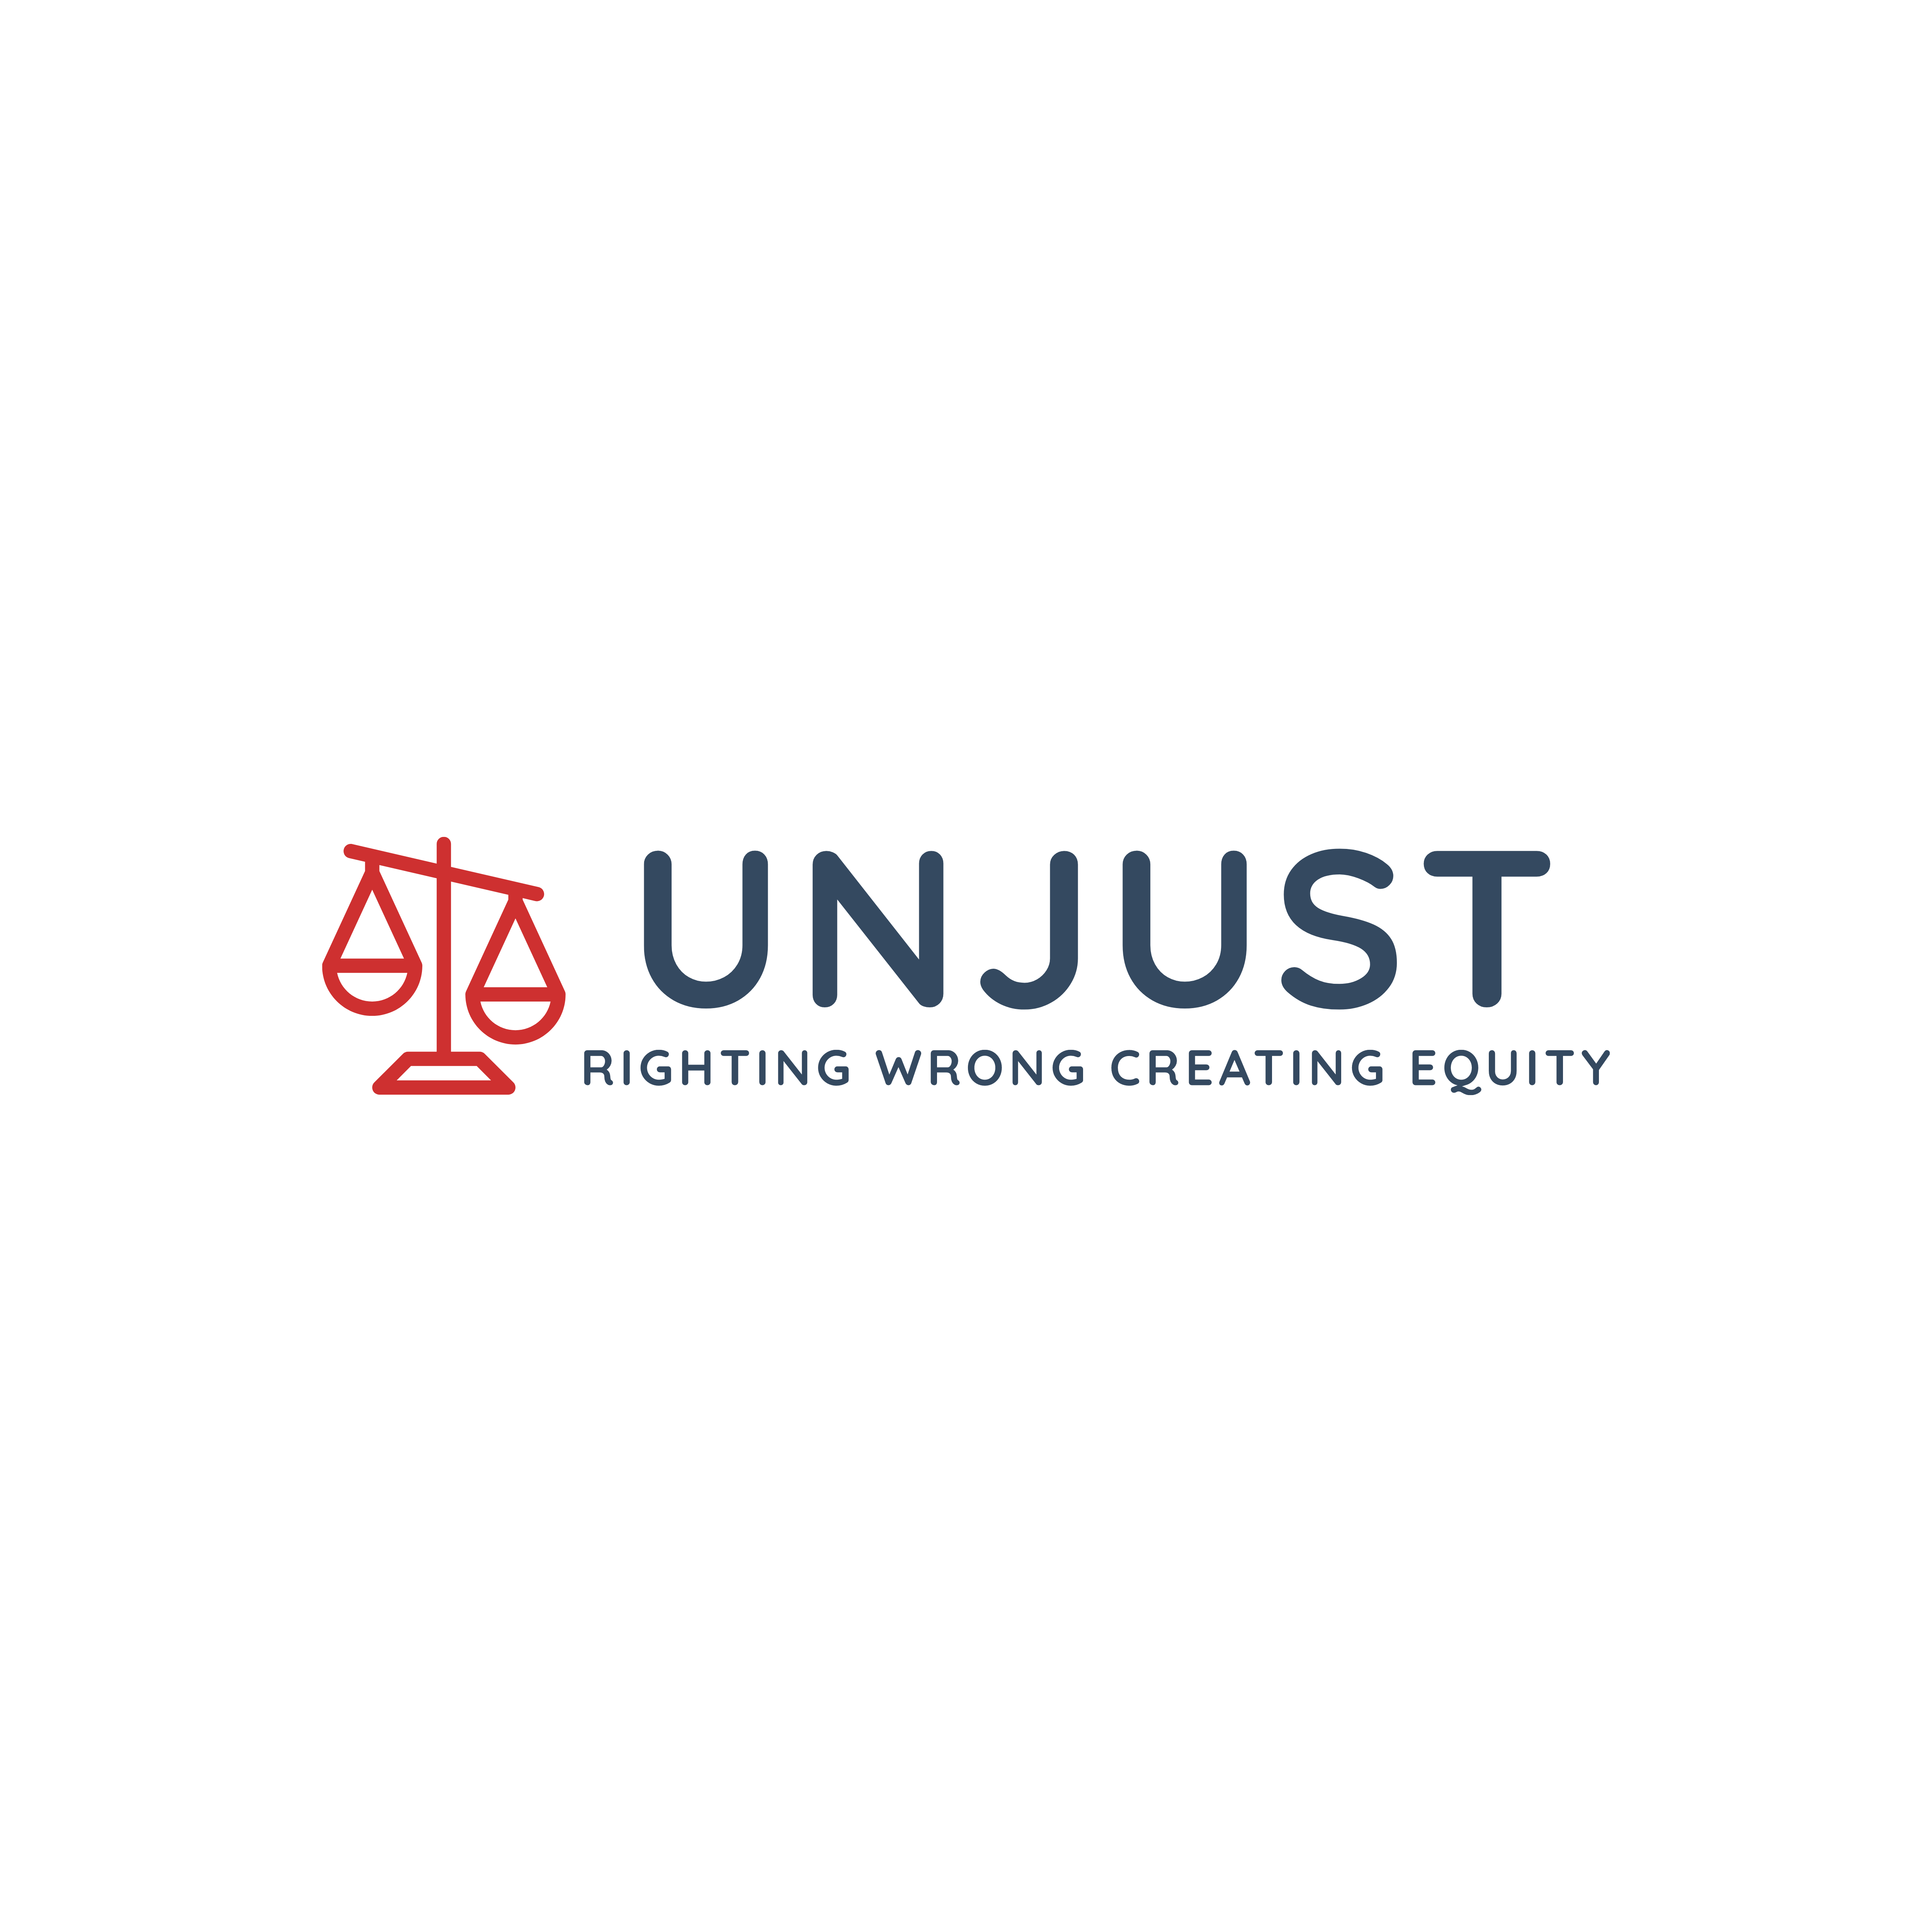 Law for Change logo